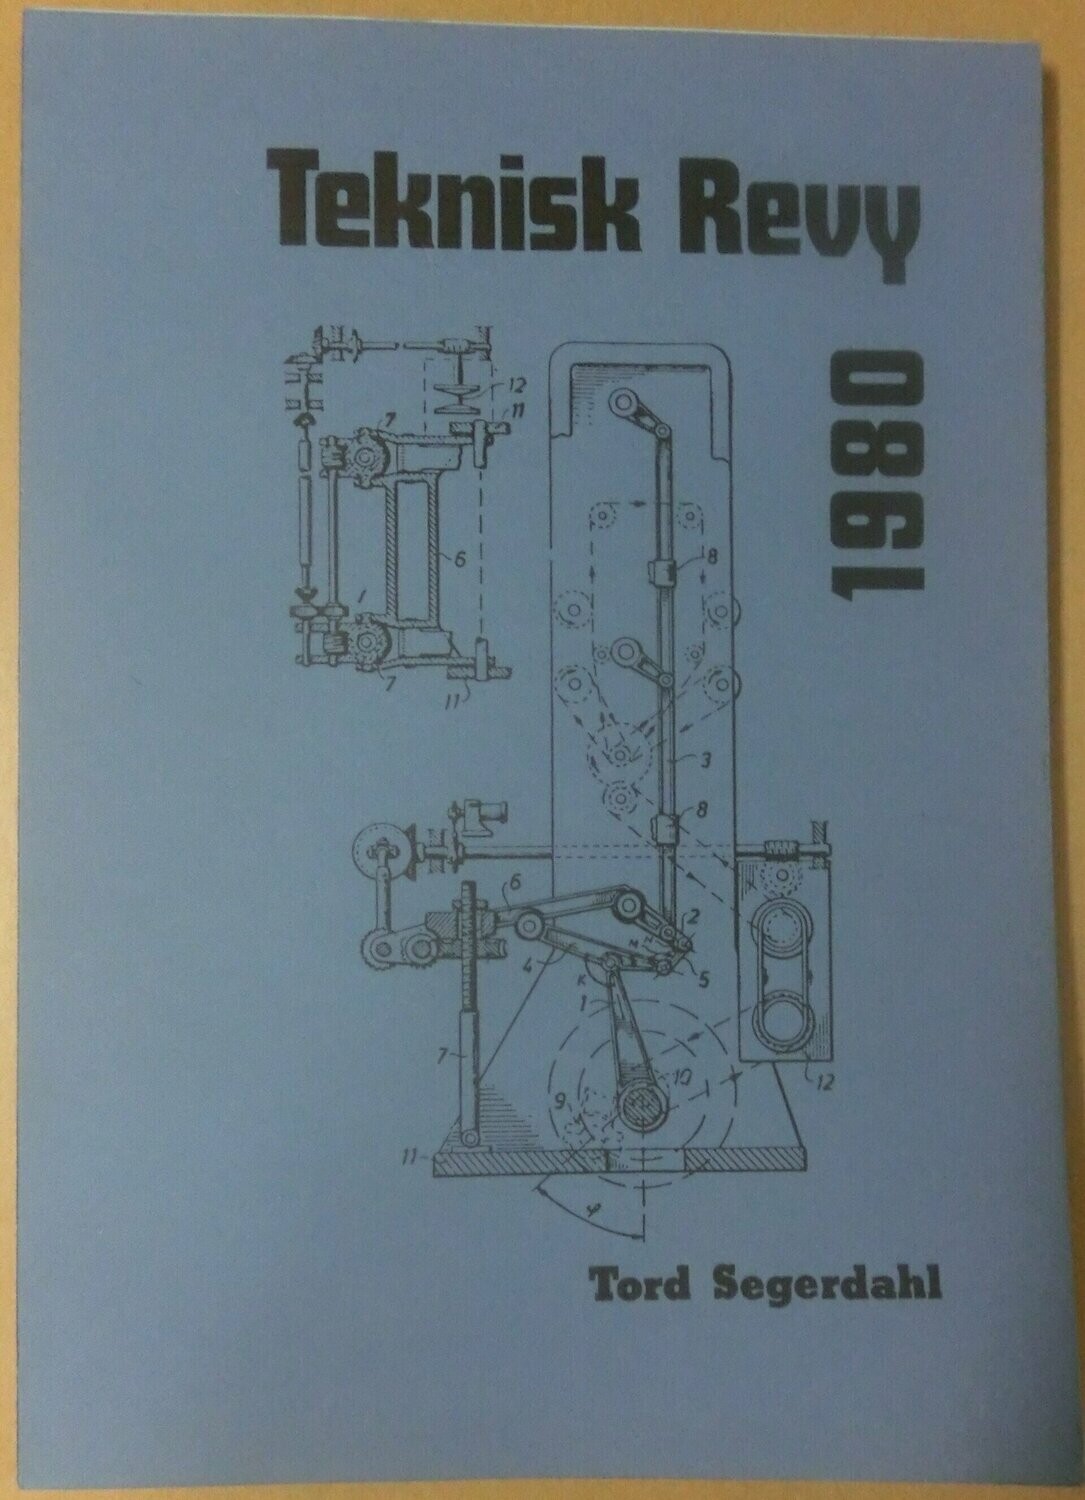 Teknisk revy 1980